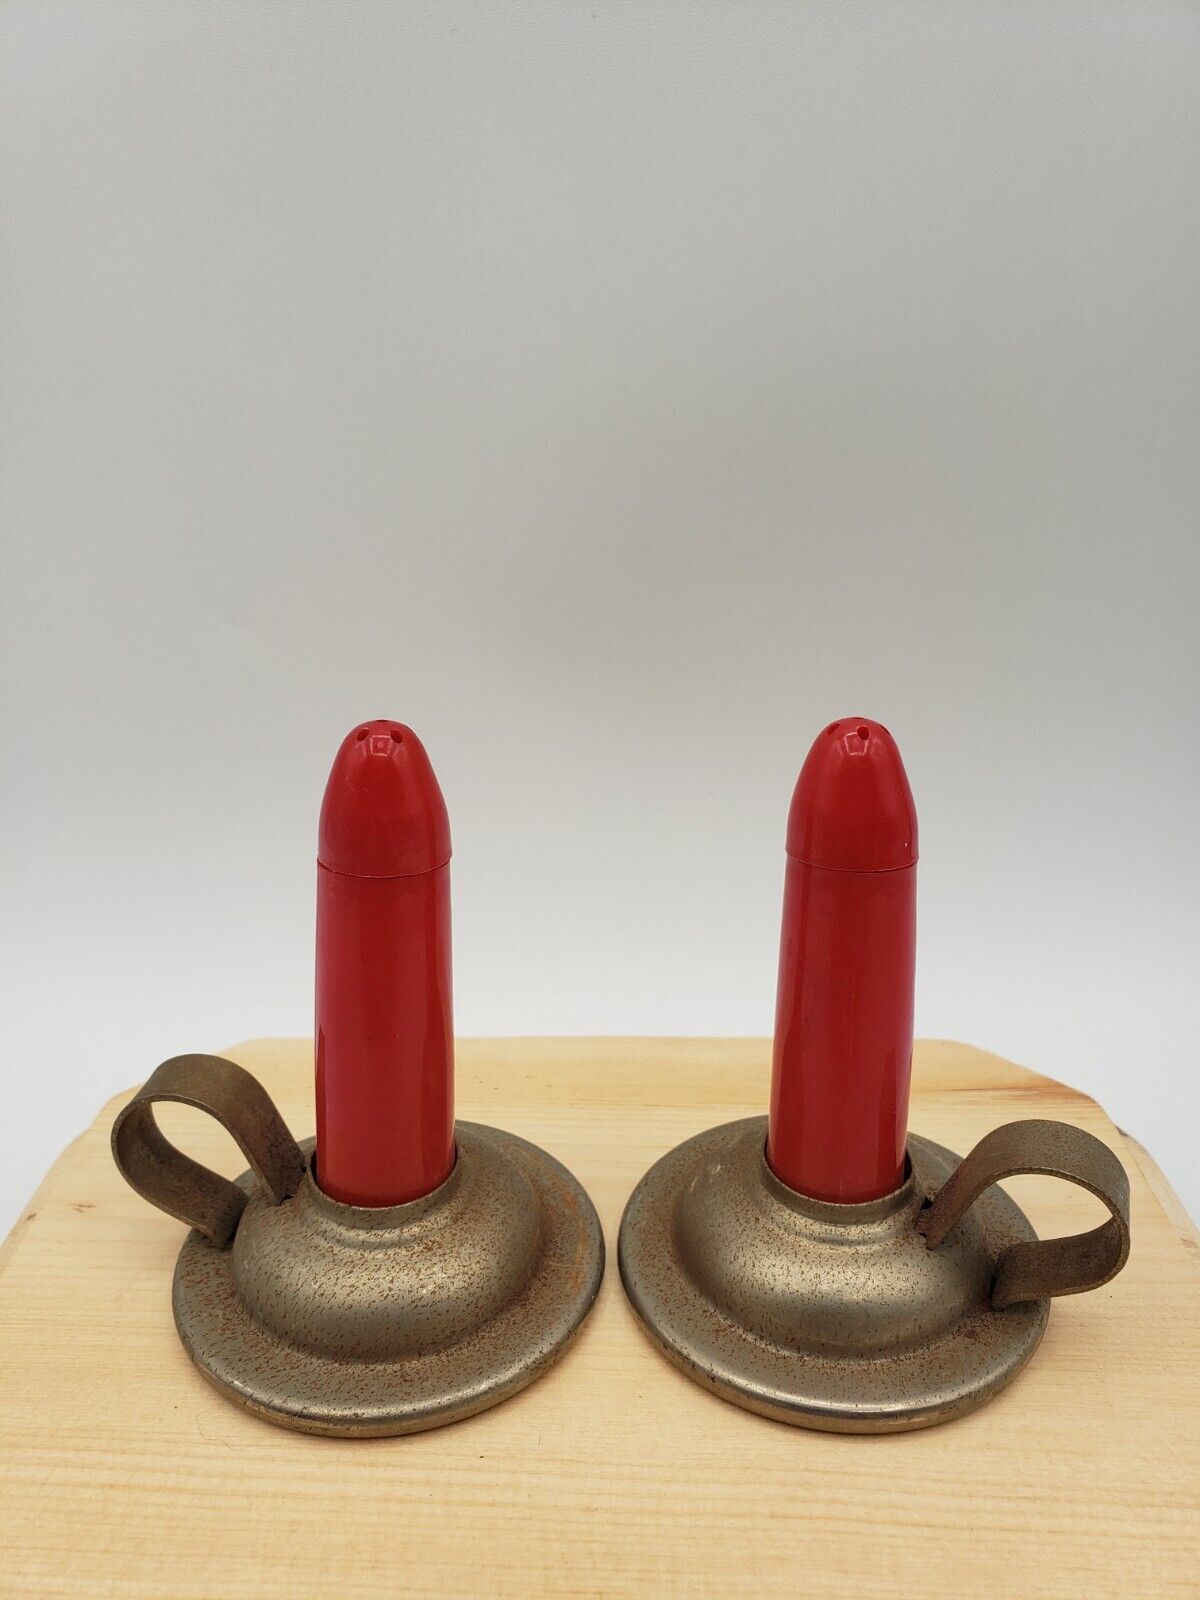 Vintage Mini Salt & Pepper Shakers Red Candle Sticks Holders, Metal Base Holiday